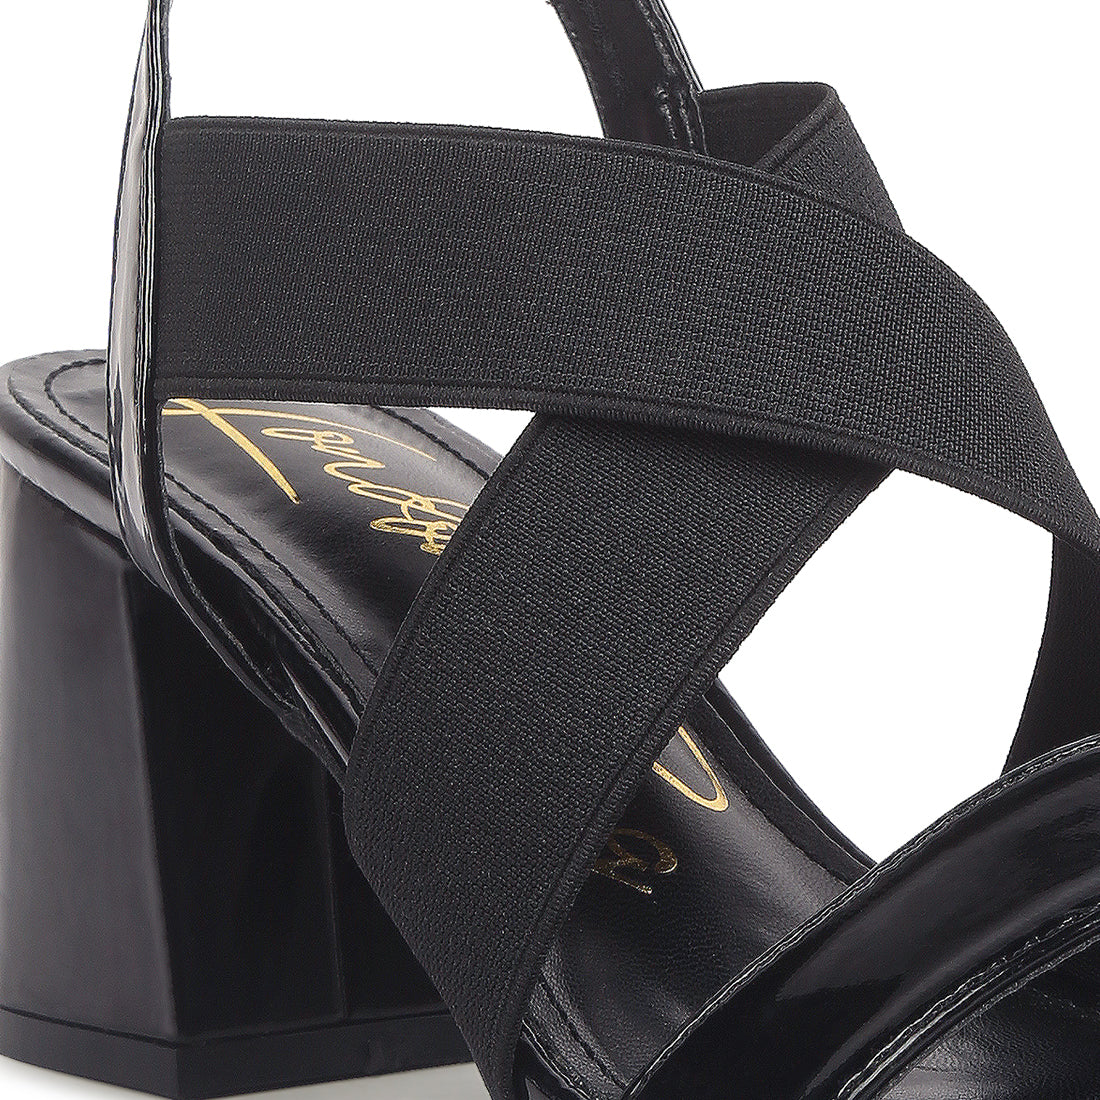 elastic straps block heel sandals#color_black